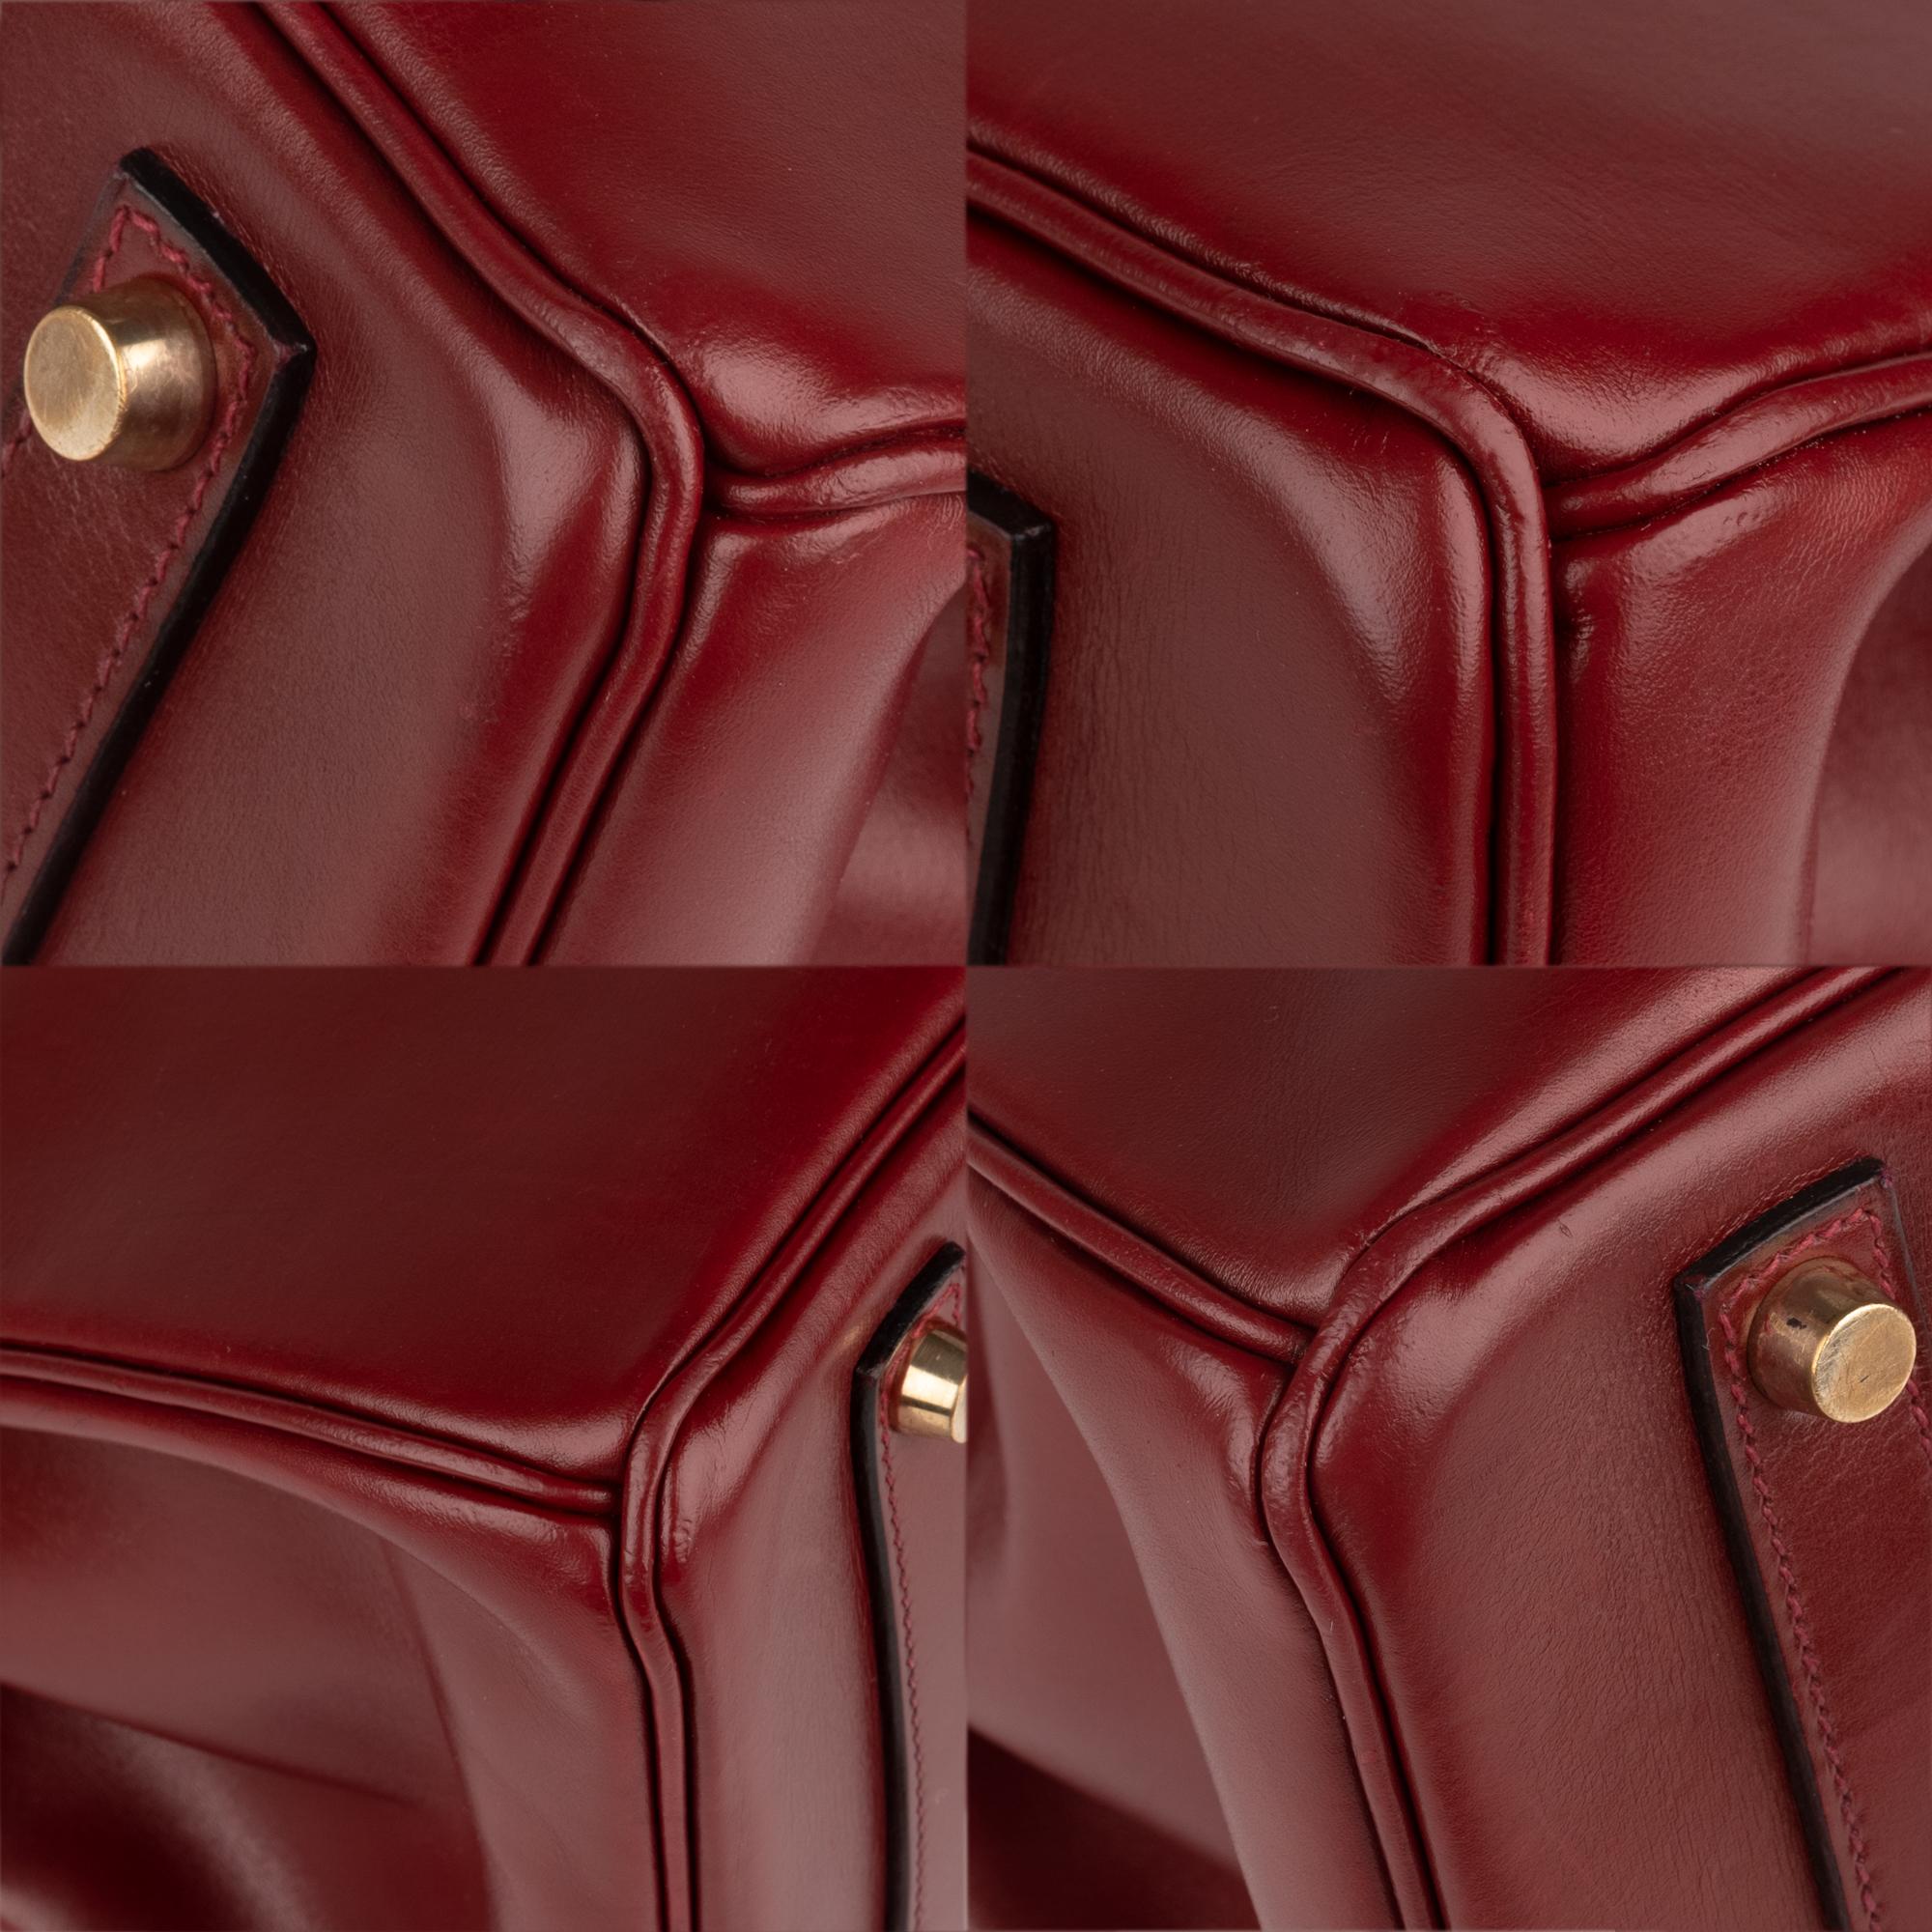 Hermes Birkin35cm Burgundy Box Leather Handbag 4